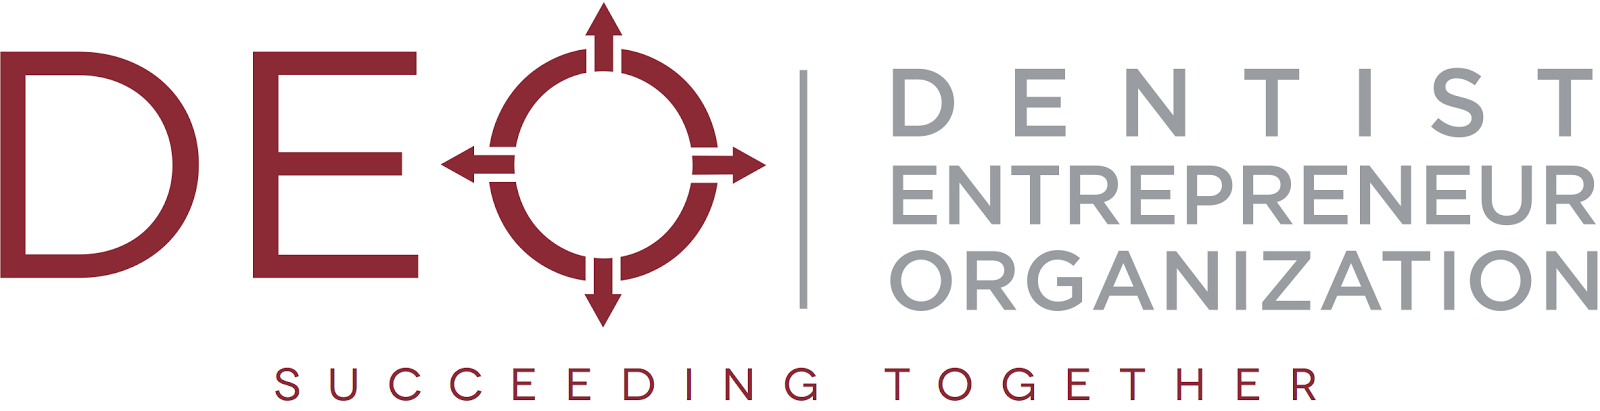 Dentist Entrepreneur Organization logo